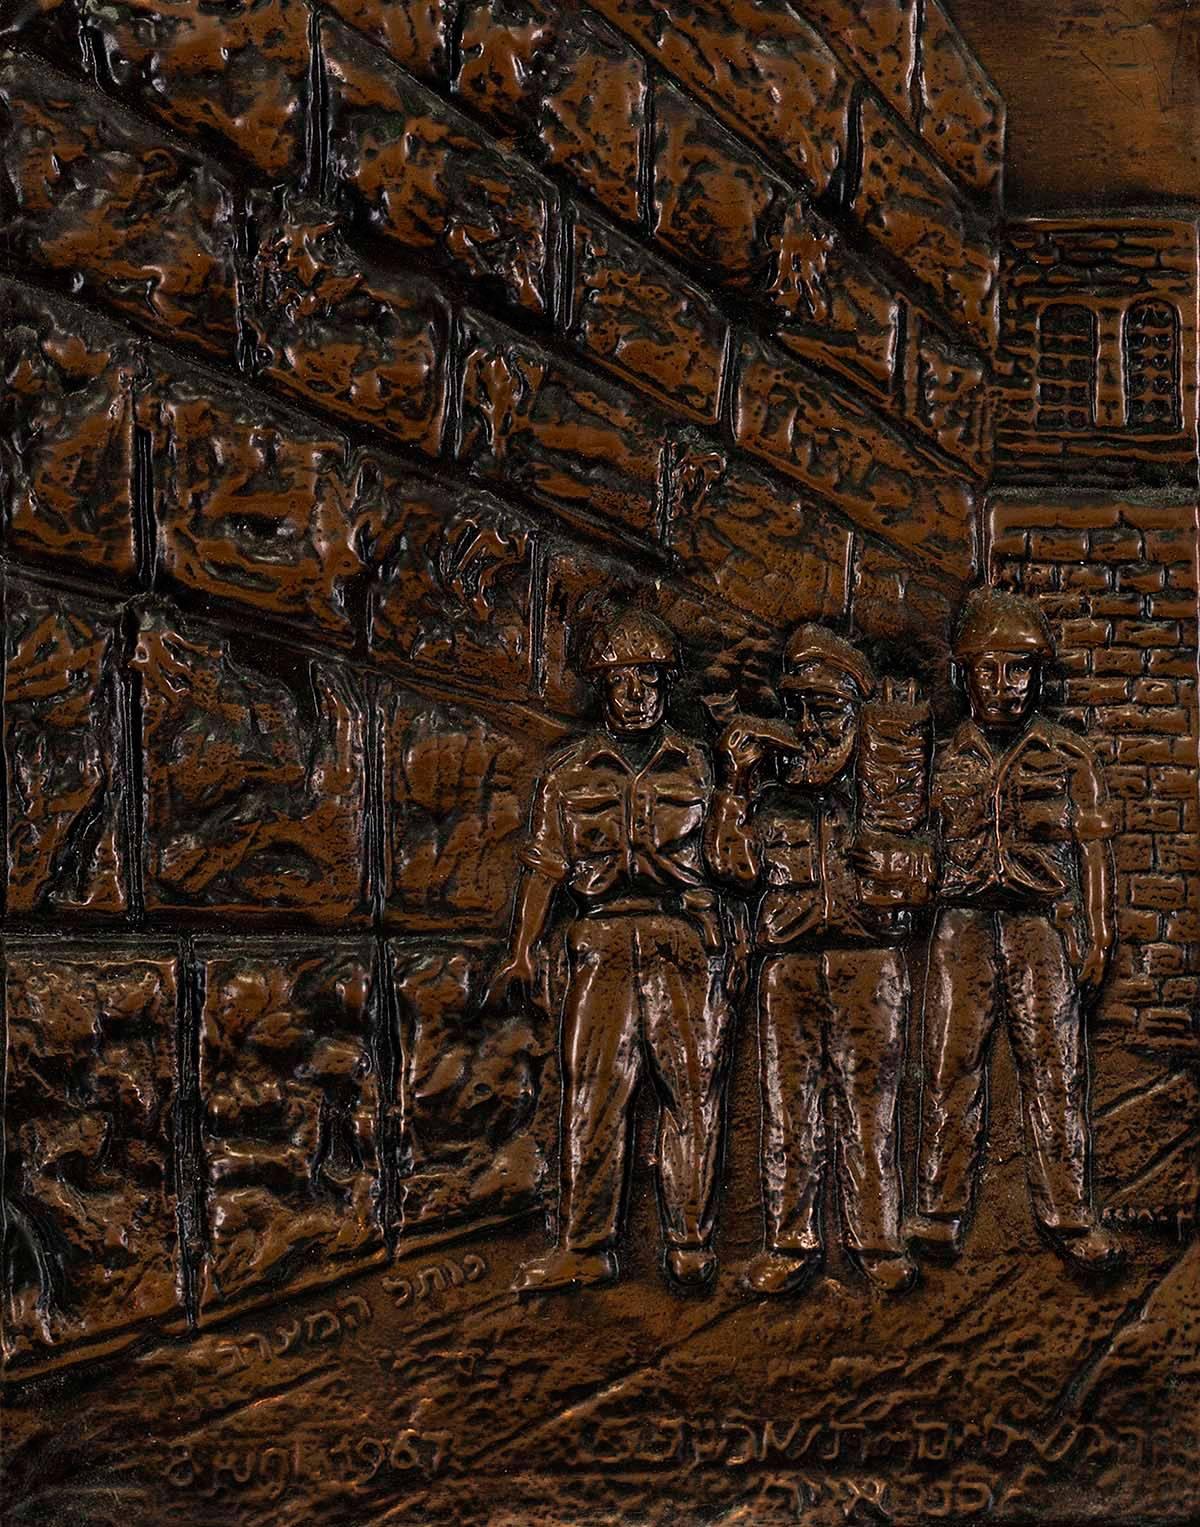 israeli copper artist named a warsaw